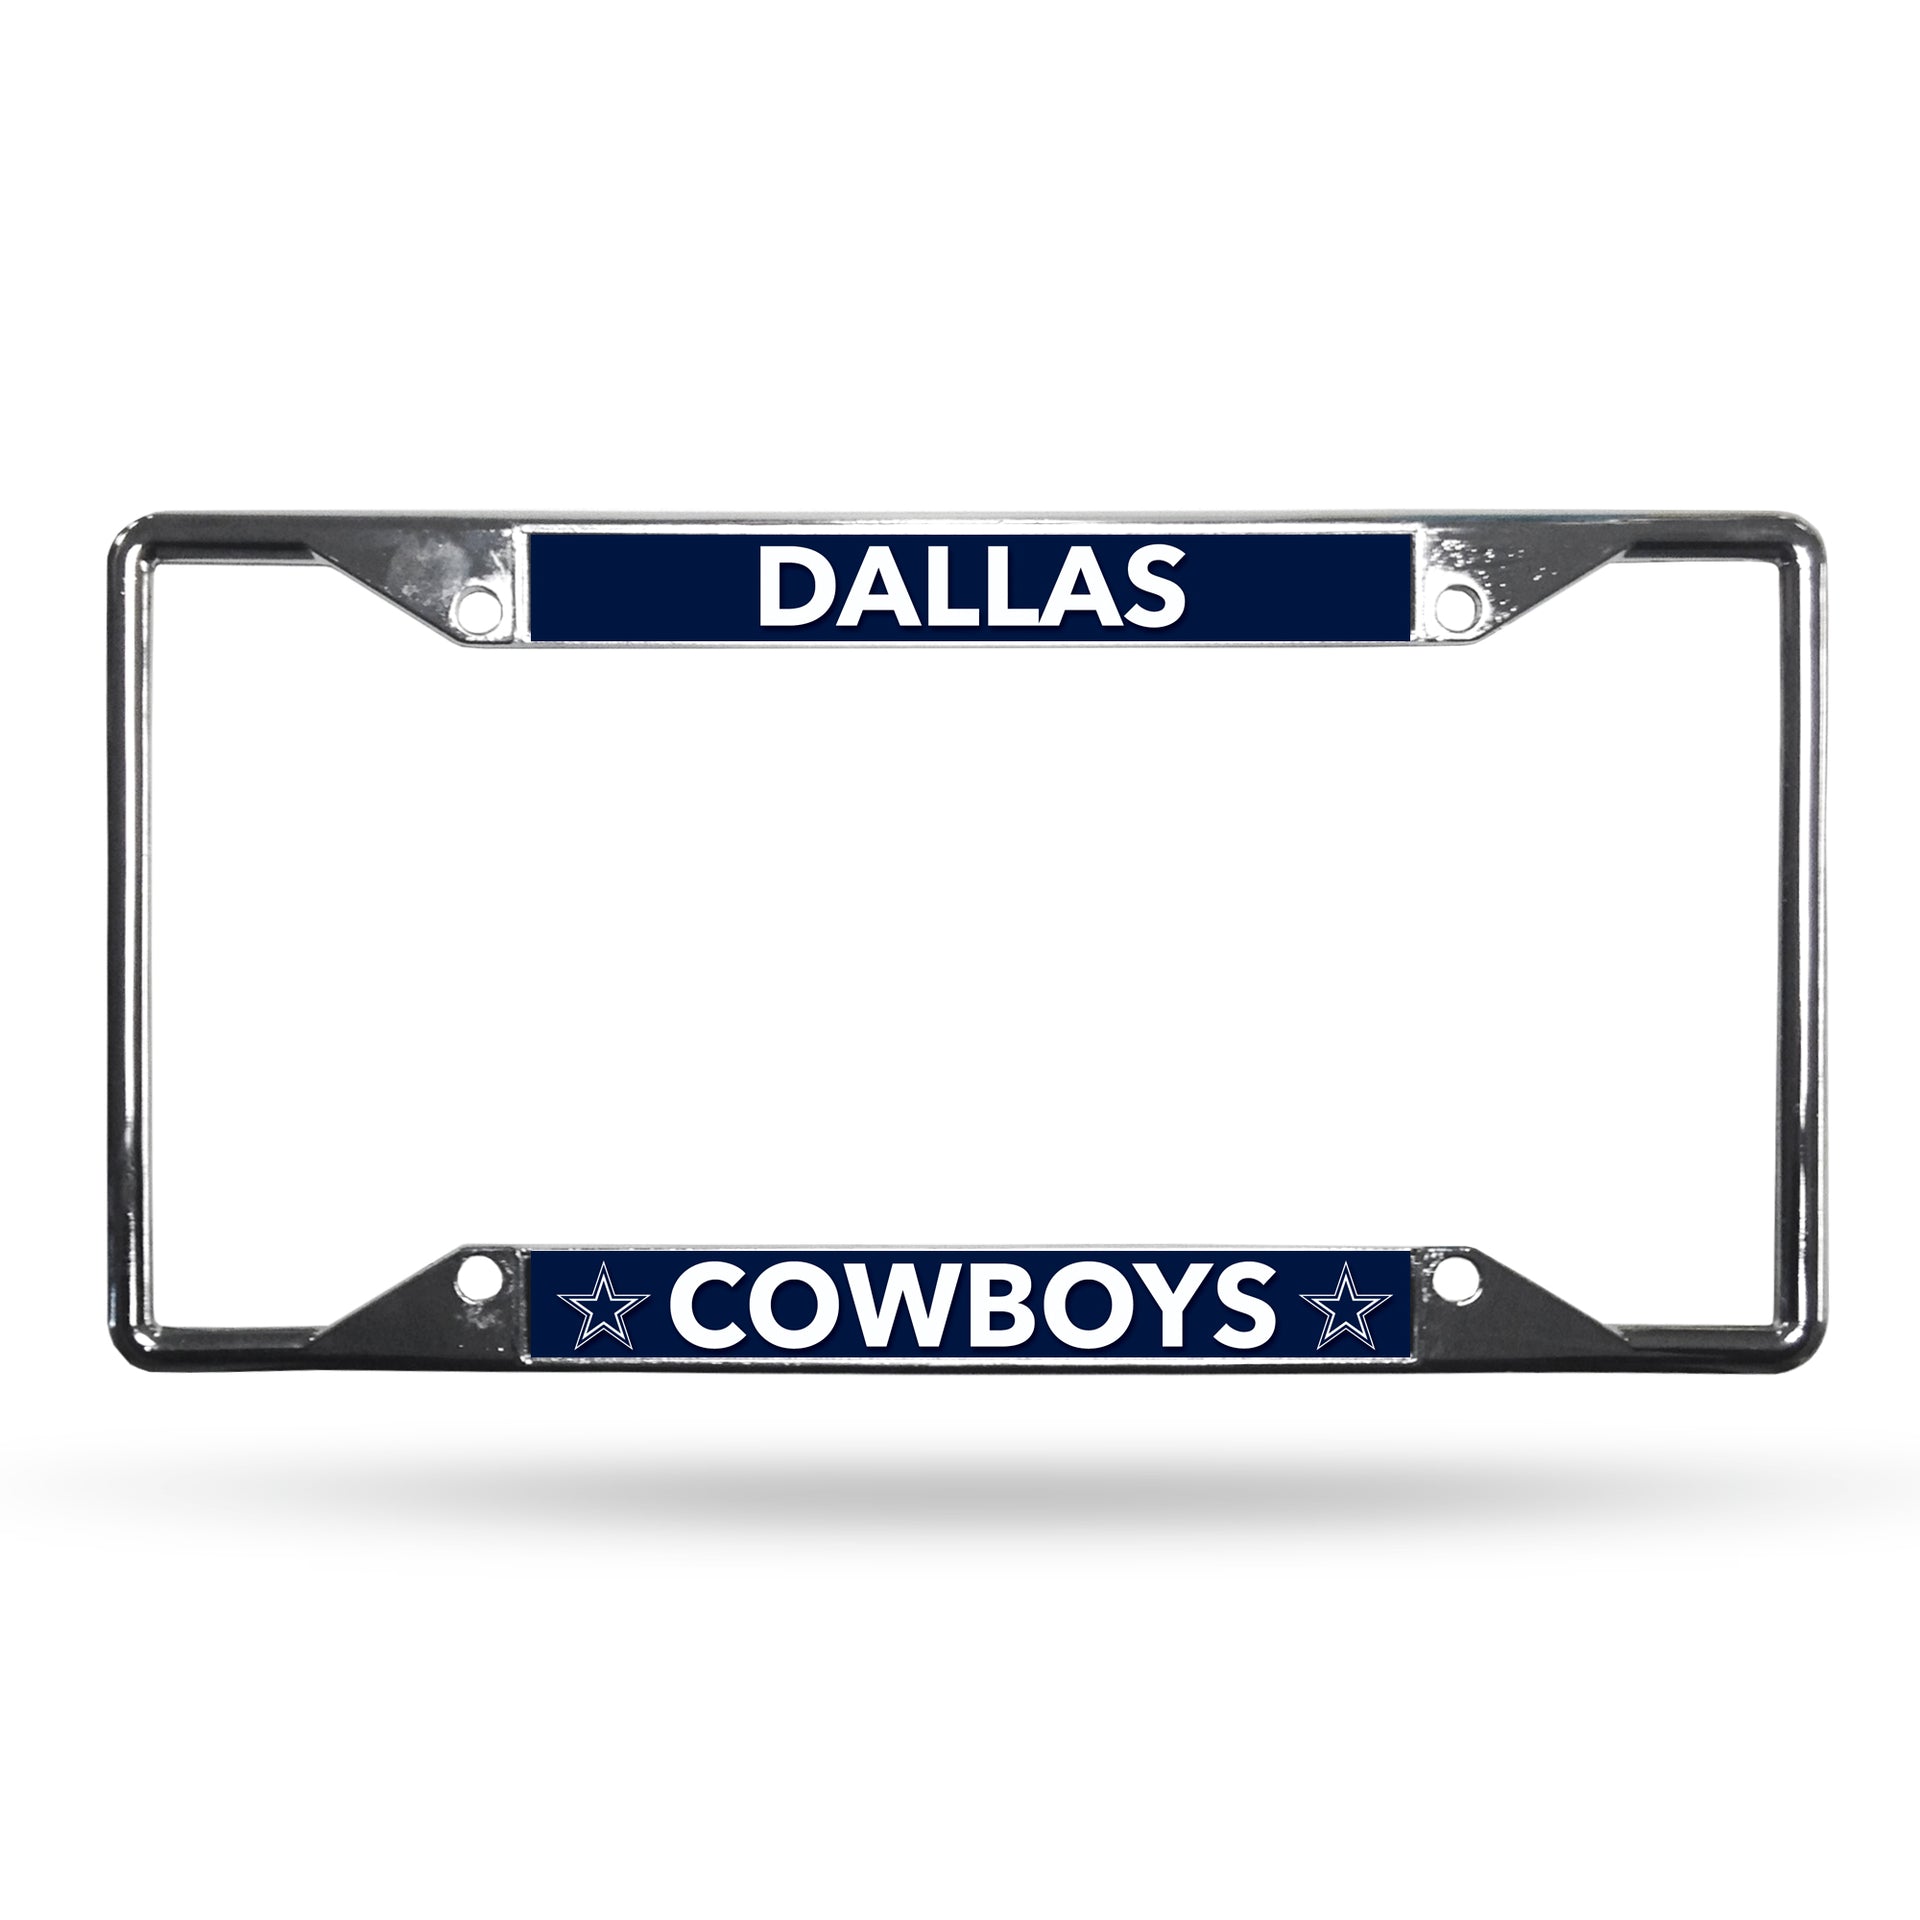 Dallas Cowboys NFL Football EZ-View Chrome License Plate Frame - Dynasty Sports & Framing 